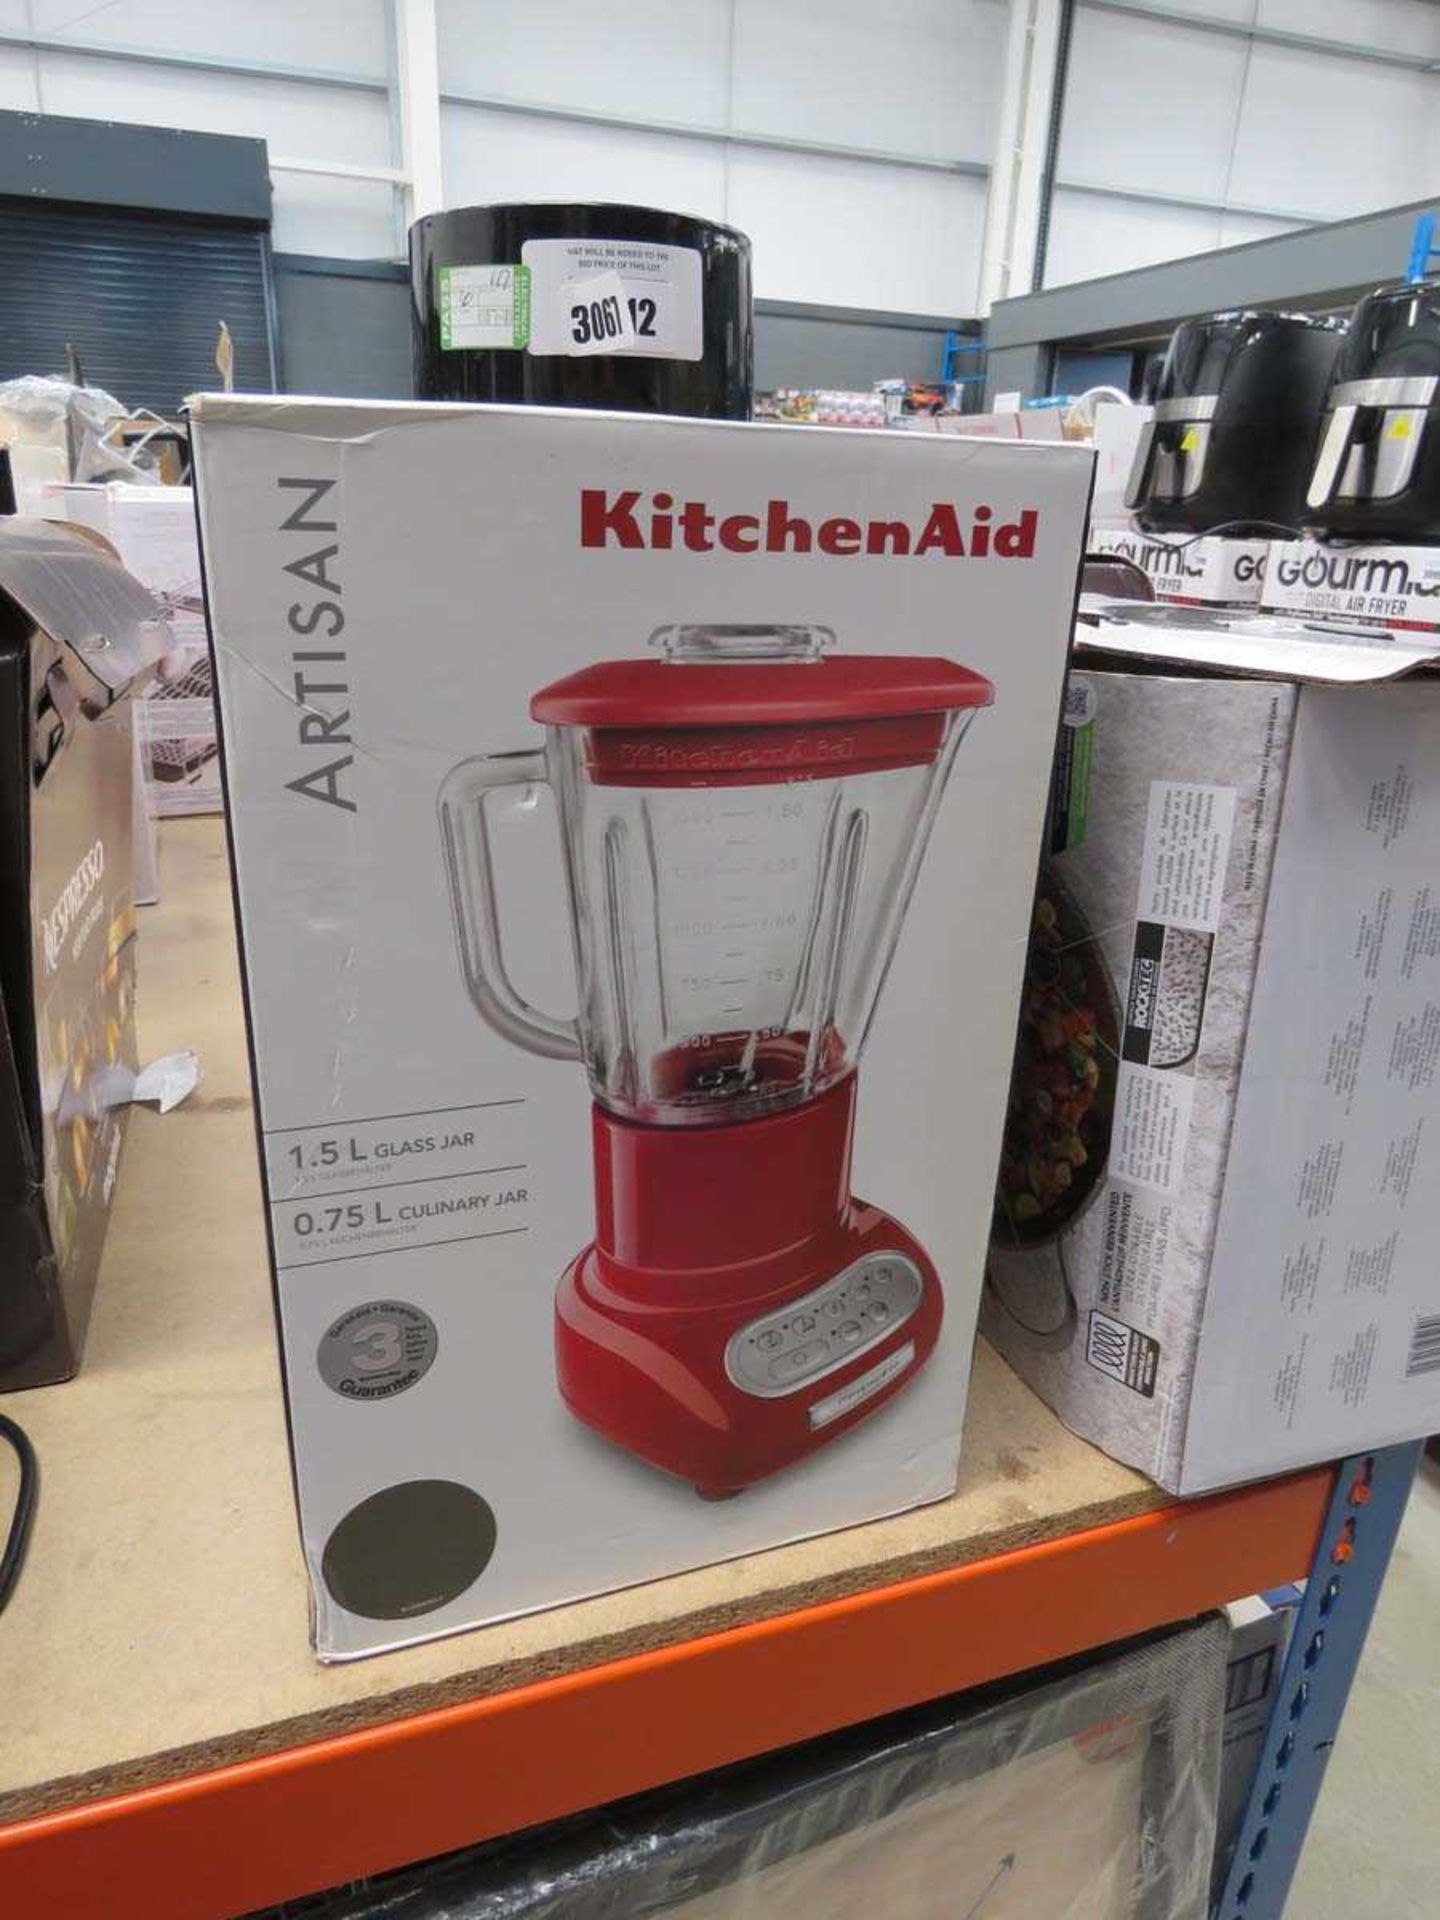 +VAT KitchenAid 1.5L blender with box (glass jug missing)